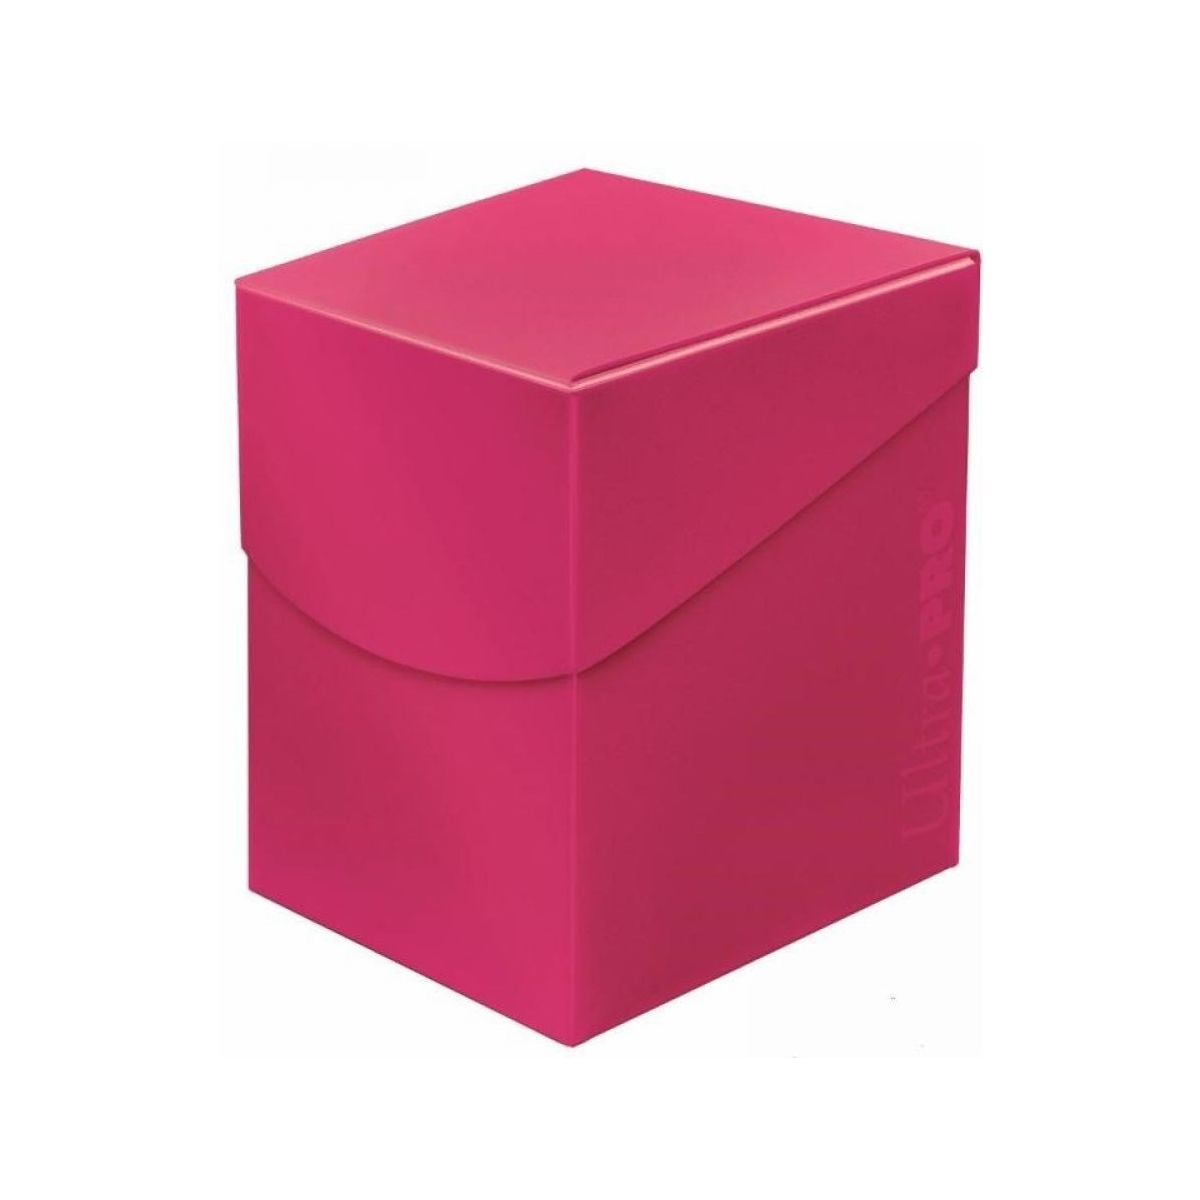 Item Deck Box - Eclipse PRO 100+ Hot Pink